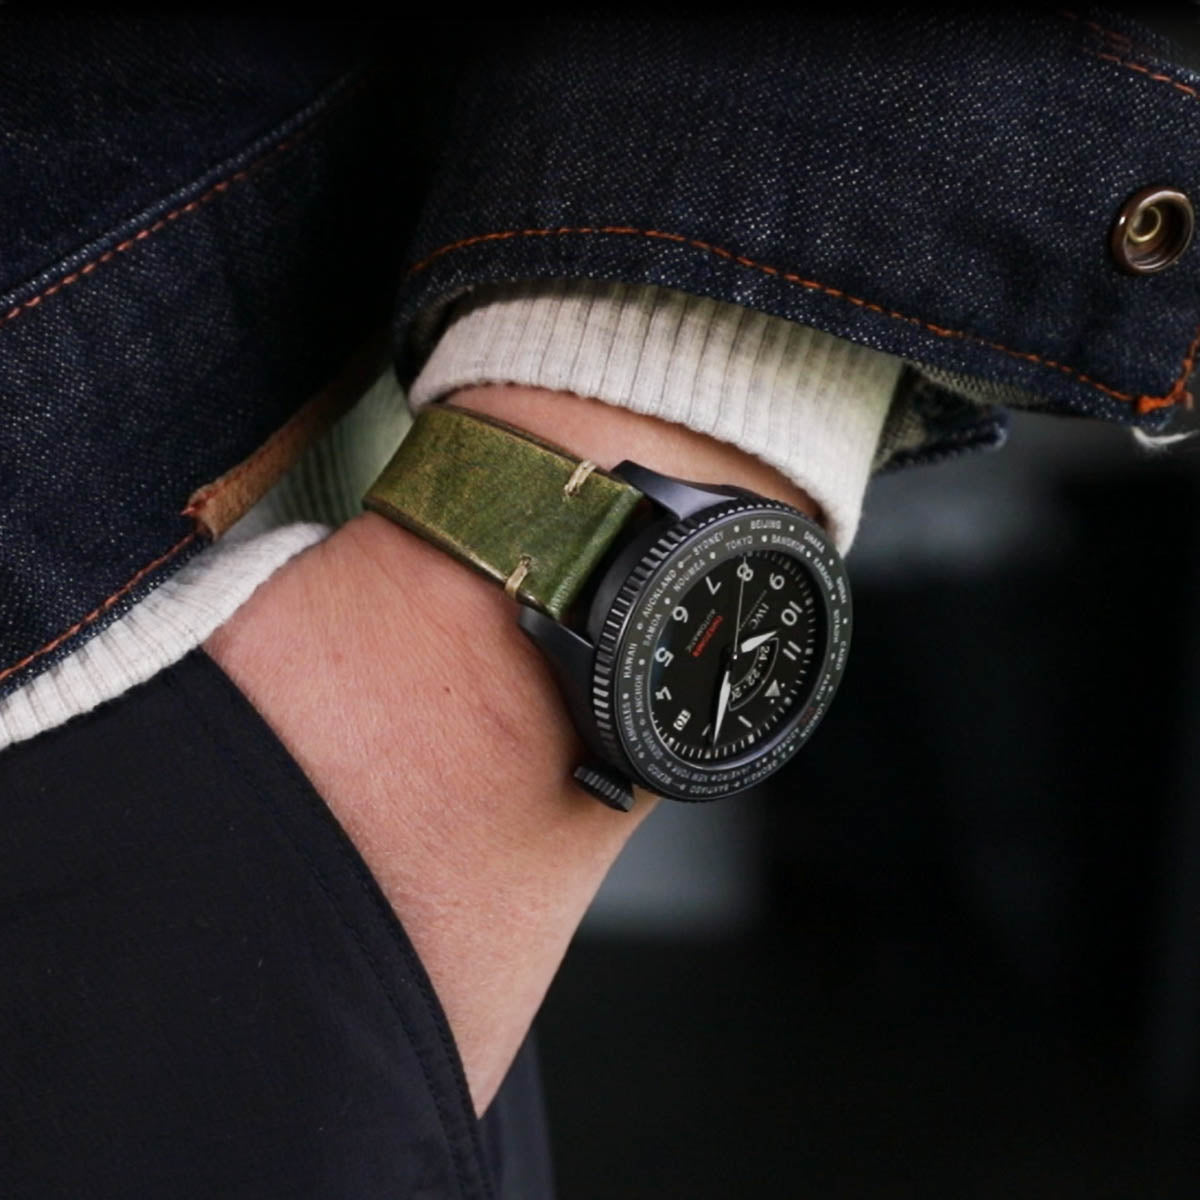 IWC Pilot Timezoner TOP GUN Ceratanium IW395505 Italian leather watch band by Strapcode